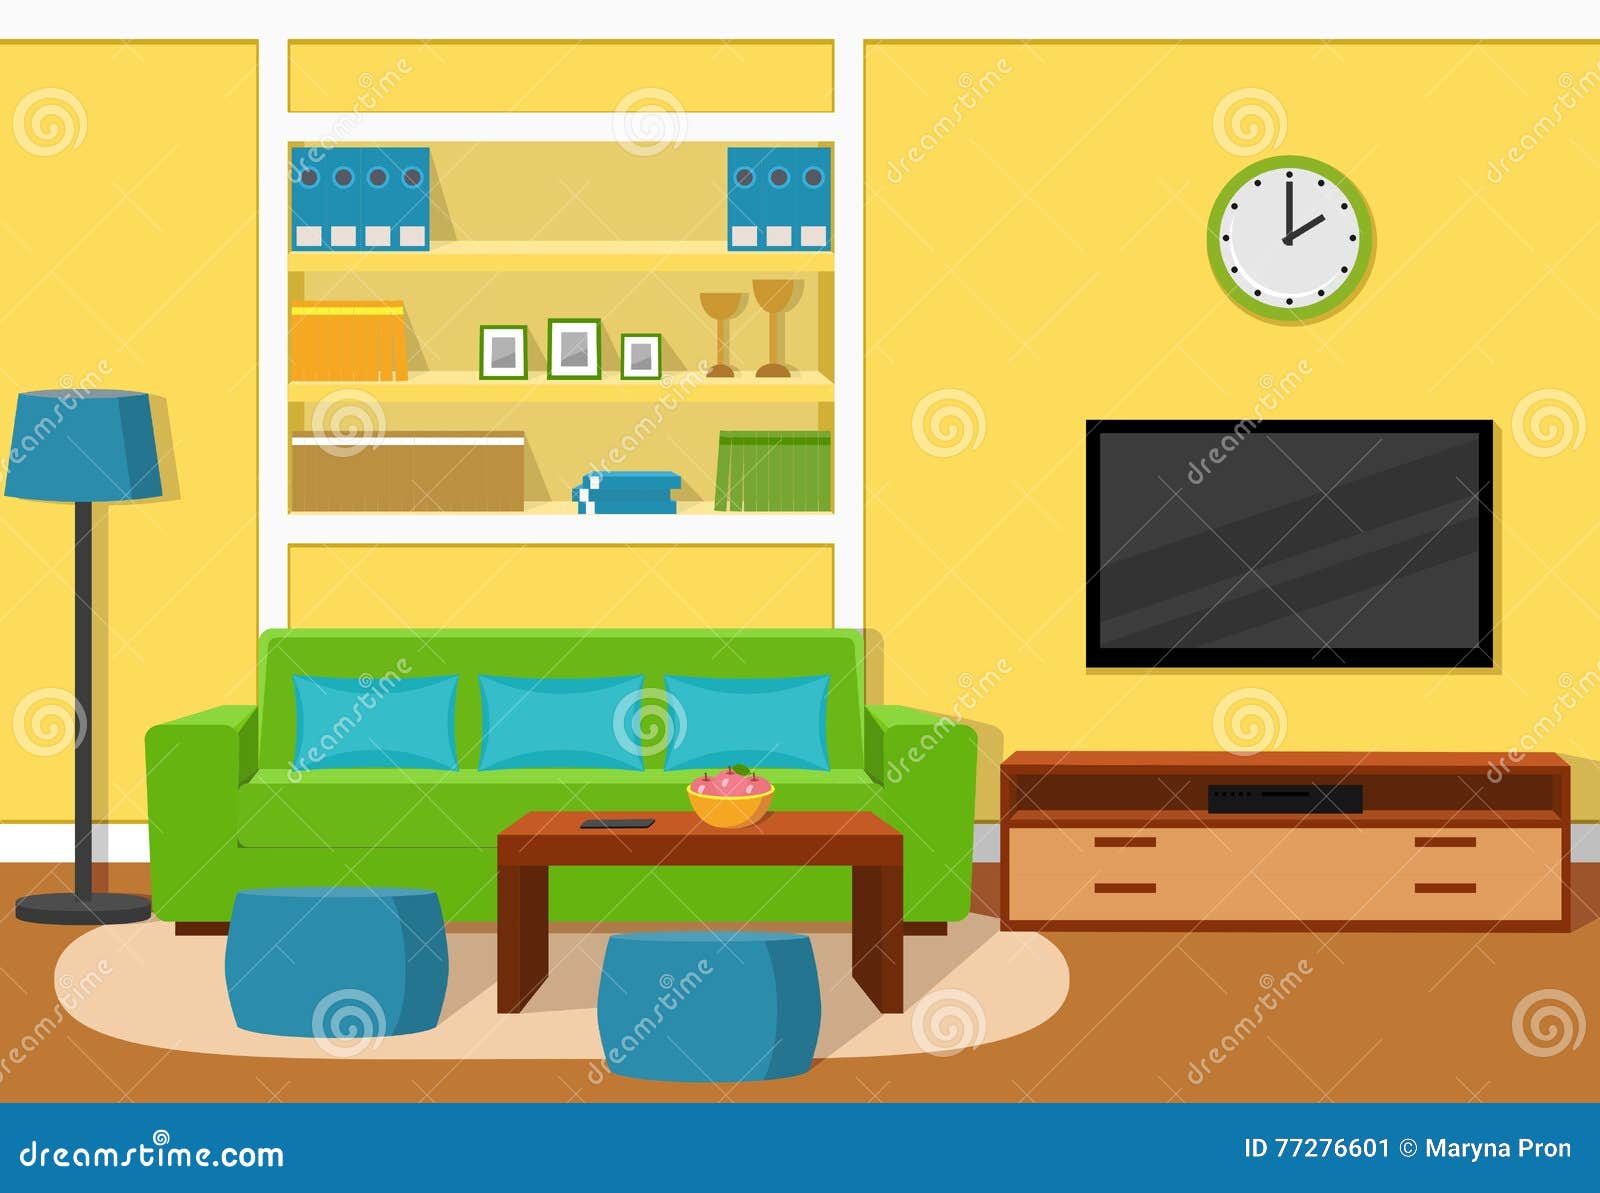 Living Room Interior With Green Sofa Vector Illustration Stock